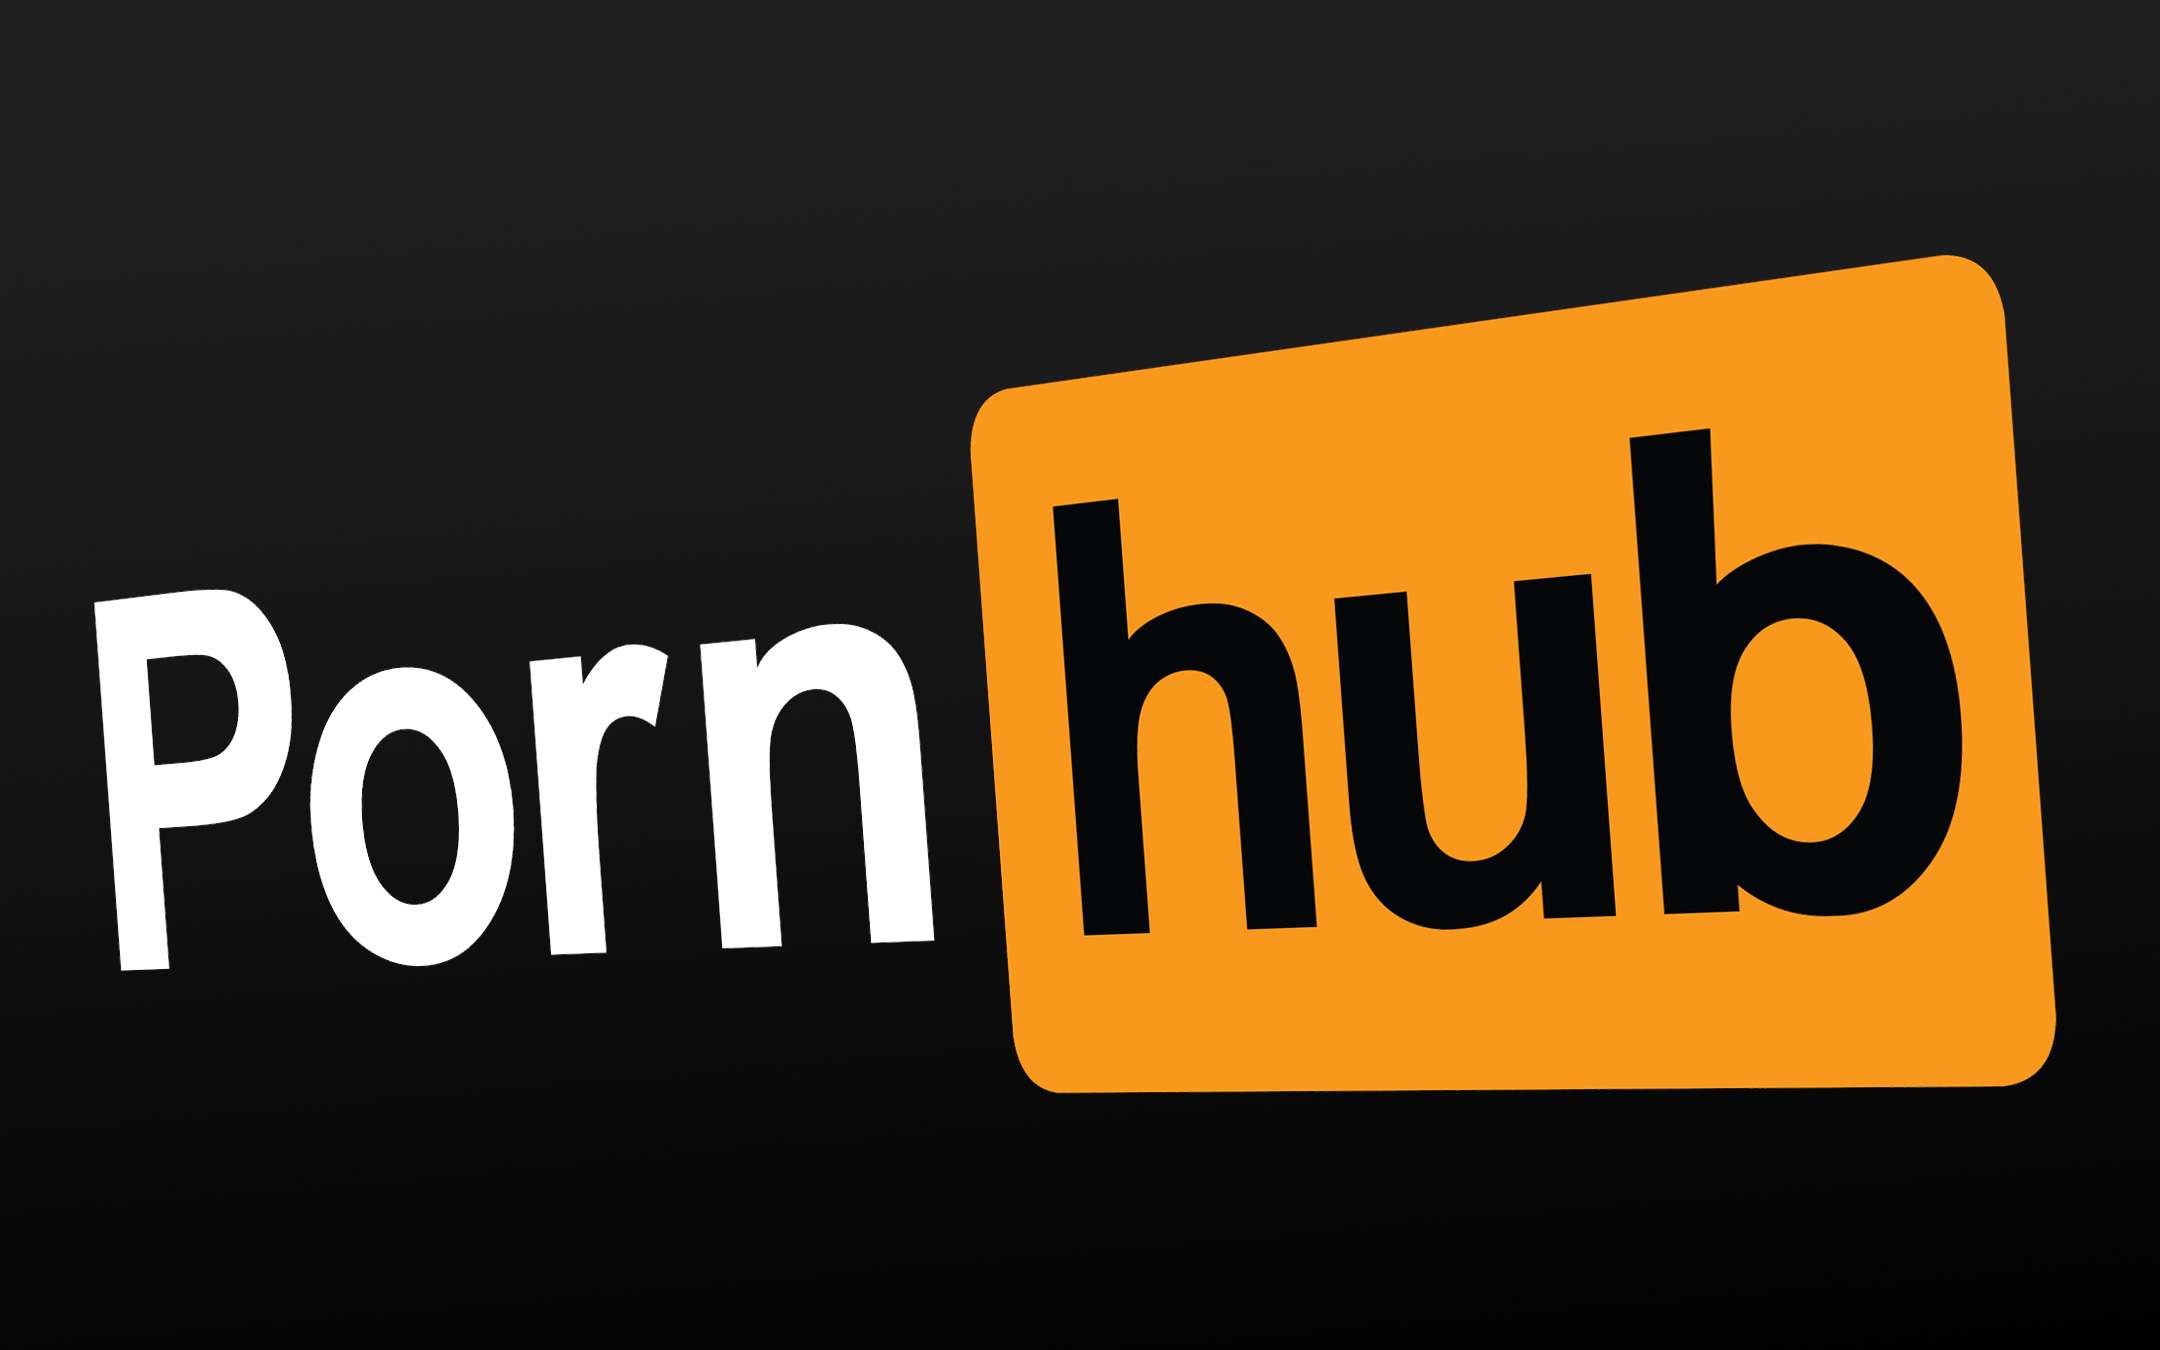 #pornhub webseries. #pornhub Заставка. #pornhub HornHub. #pornhub порнхаб. 